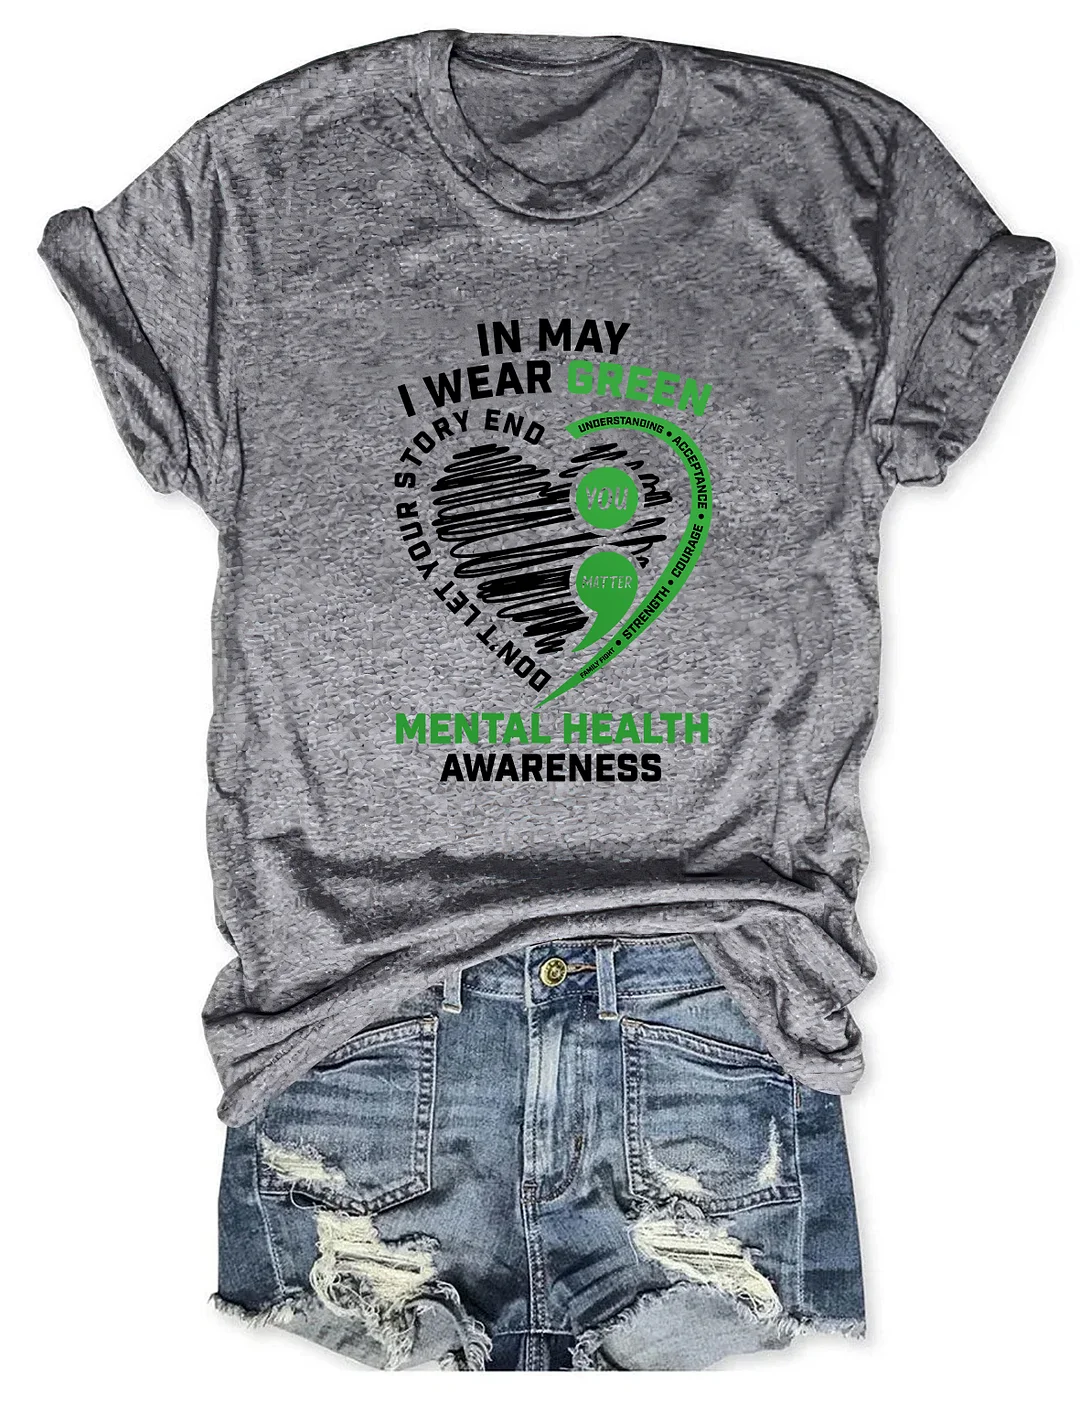 In May I Wear Green Mental Health Awareness T-shirt